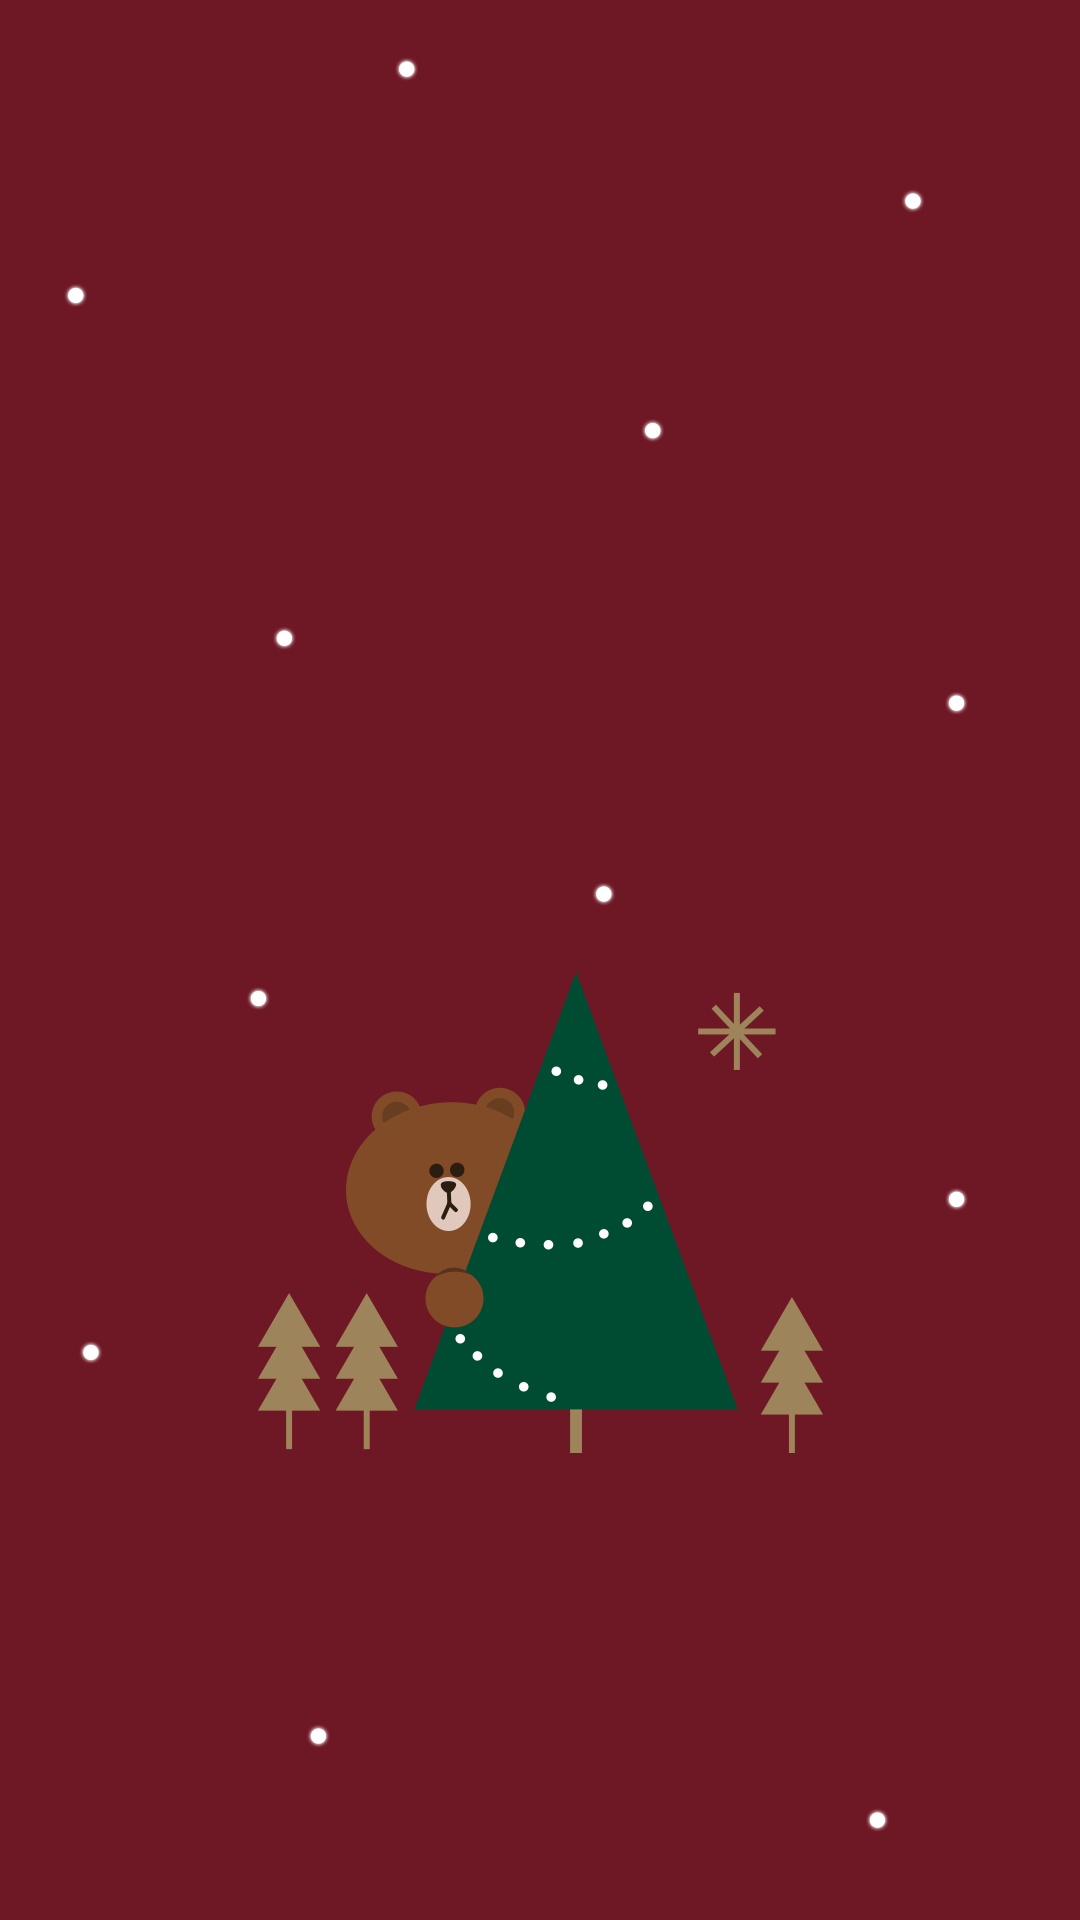 Line Deco公式アカウント Lineフレンズのクリスマス コレクション出ましたよ ブラウン コニー サリーの クリスマス壁紙可愛いよね ブラウンの可愛い画像 Http T Co Vhykl5qulm